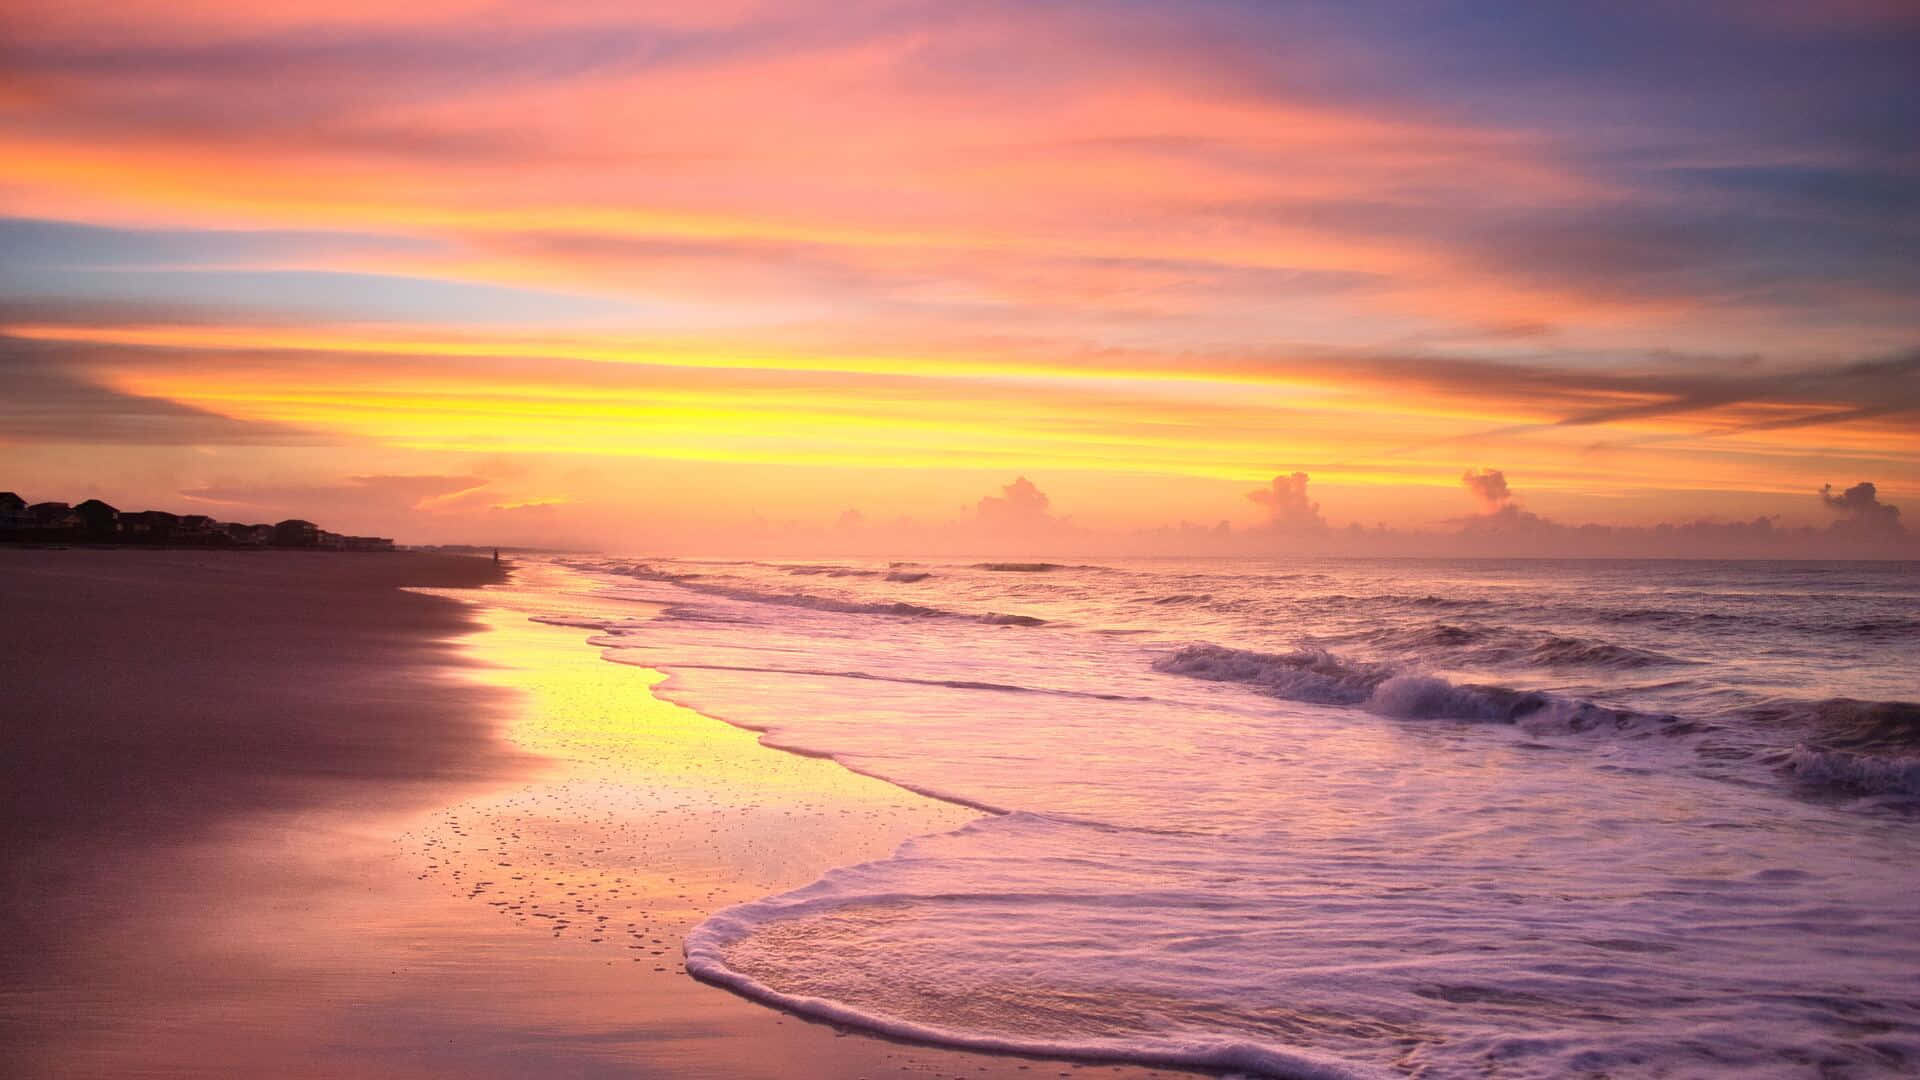 Sunrise over the calm beach in beautiful HD resolution Wallpaper